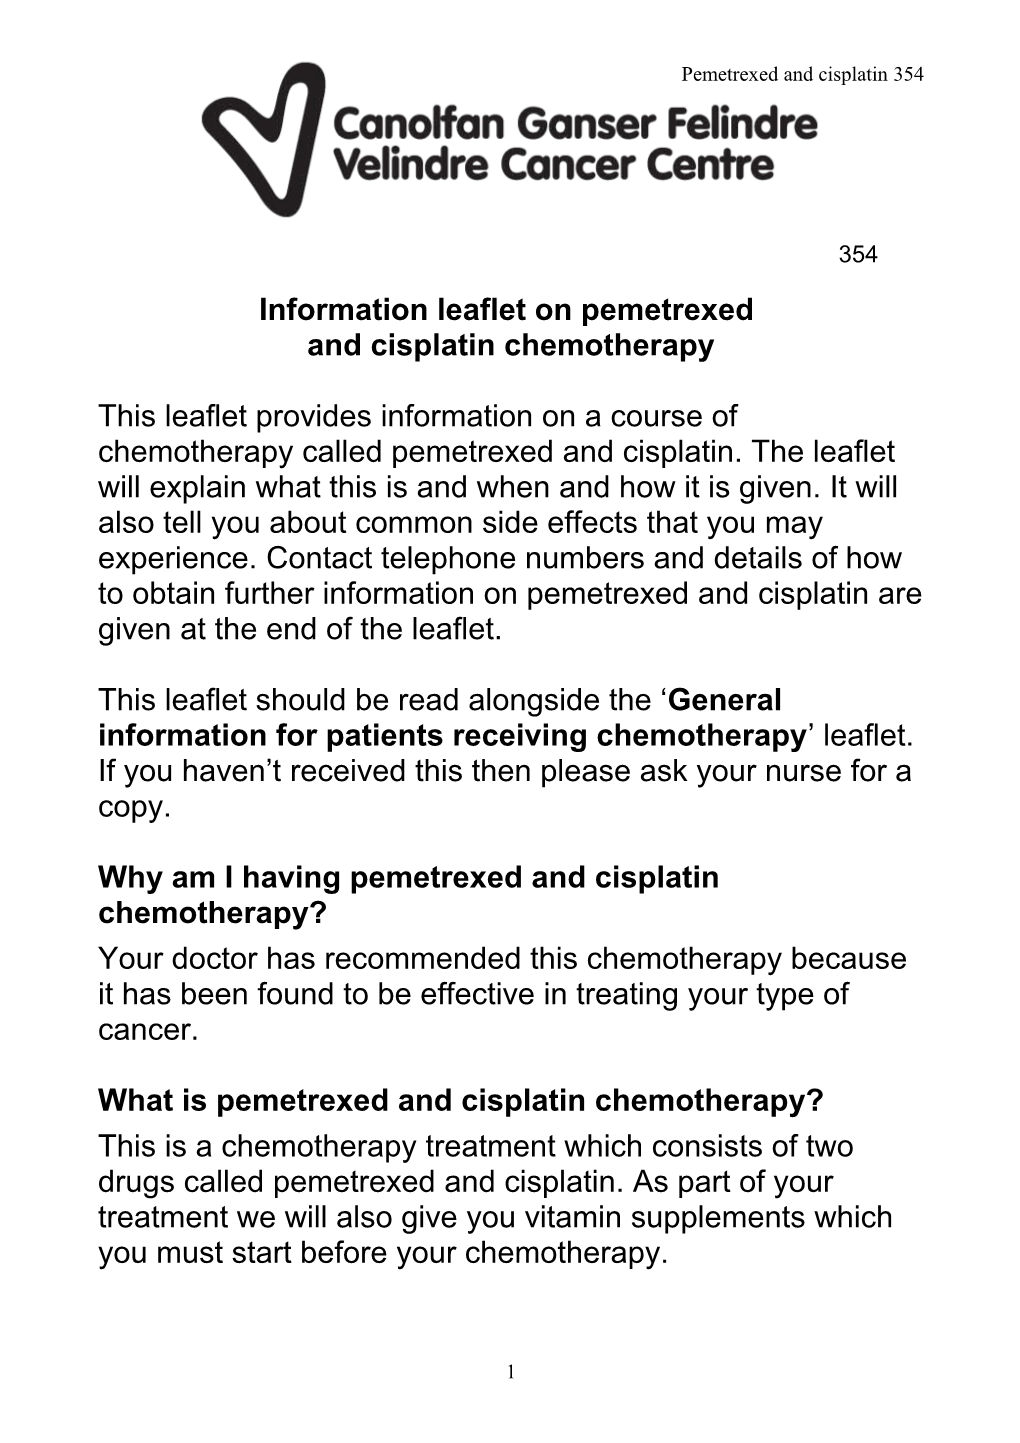 Information Leaflet on Pemetrexed